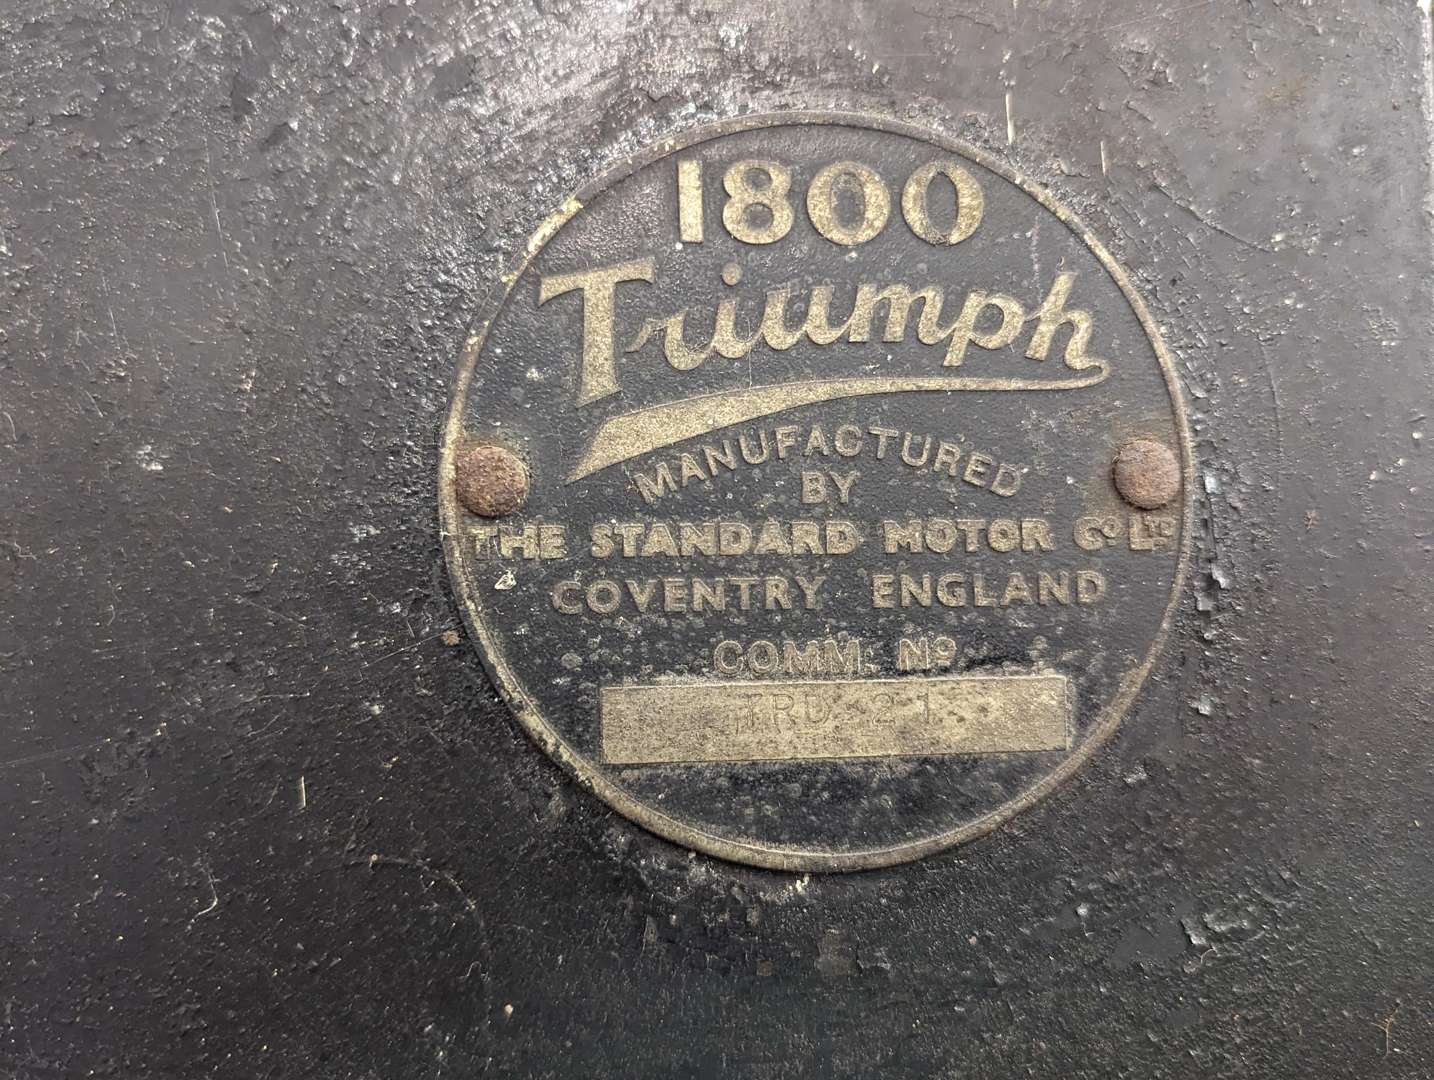 <p>1946 TRIUMPH 1800 ROADSTER&nbsp;</p>